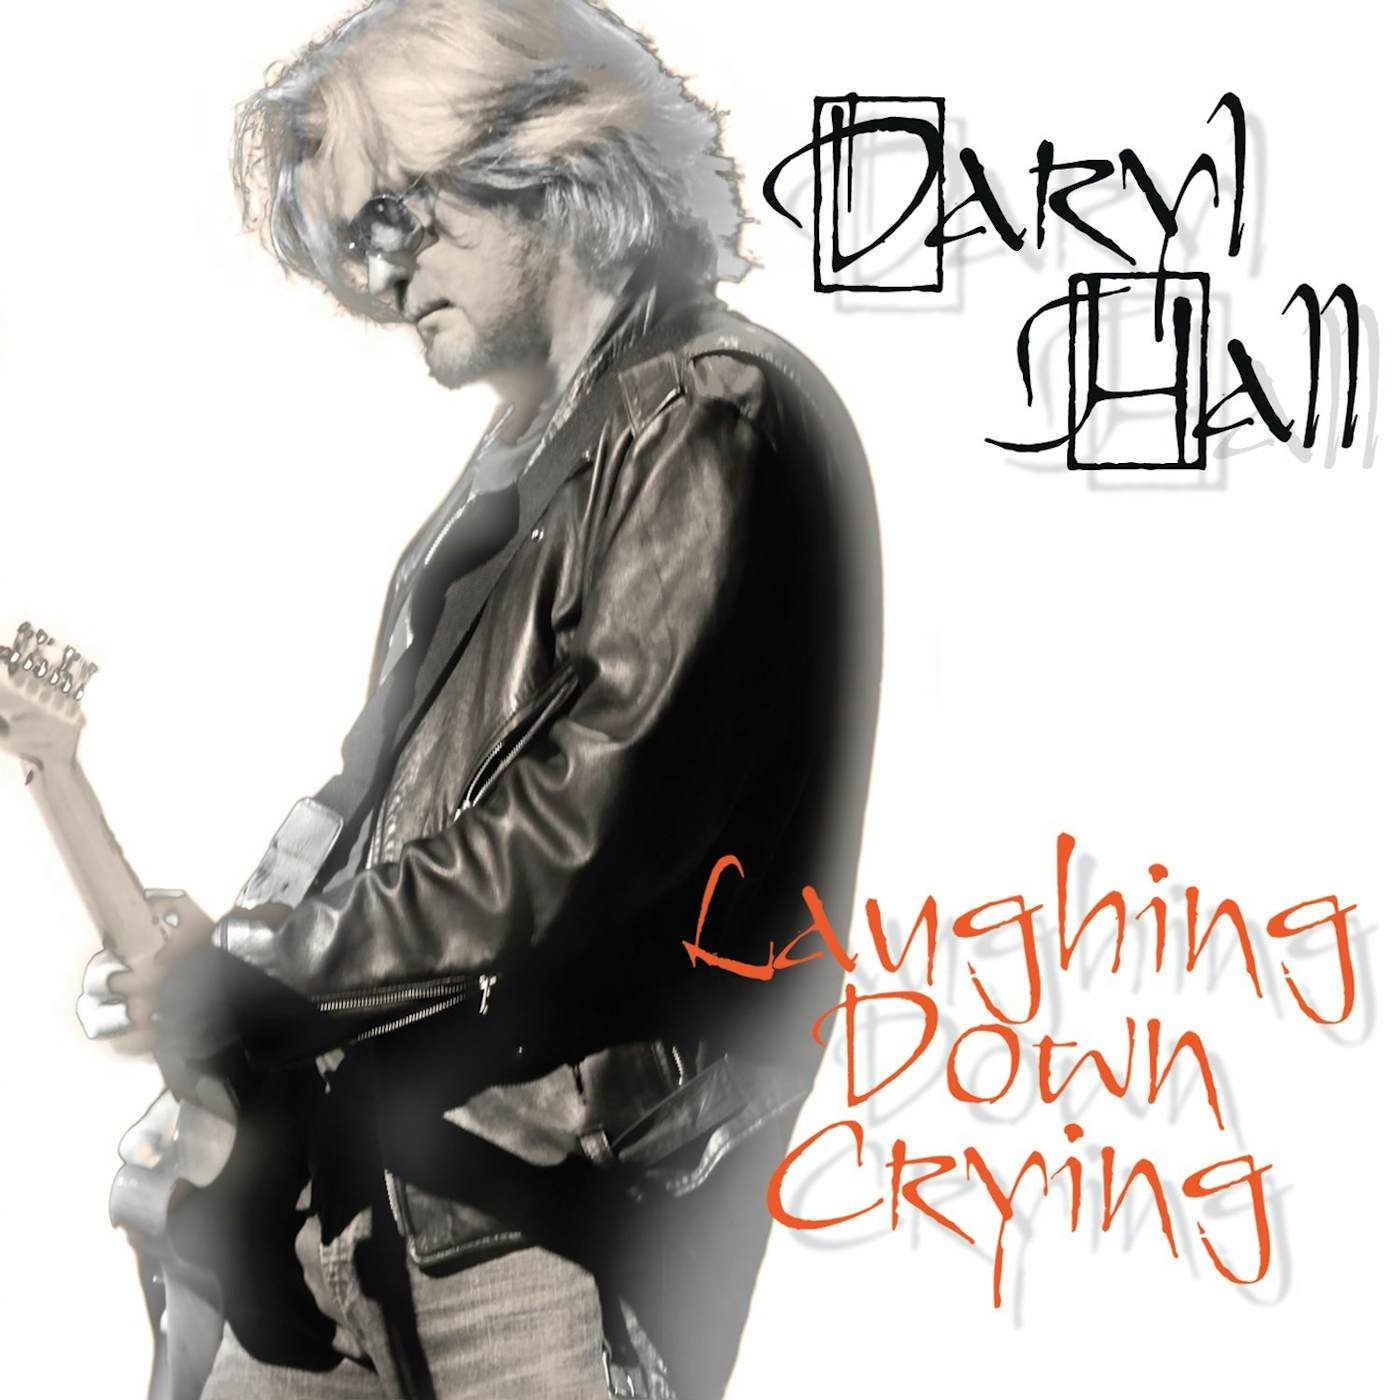 Daryl Hall LAUGHING DOWN CRYING CD